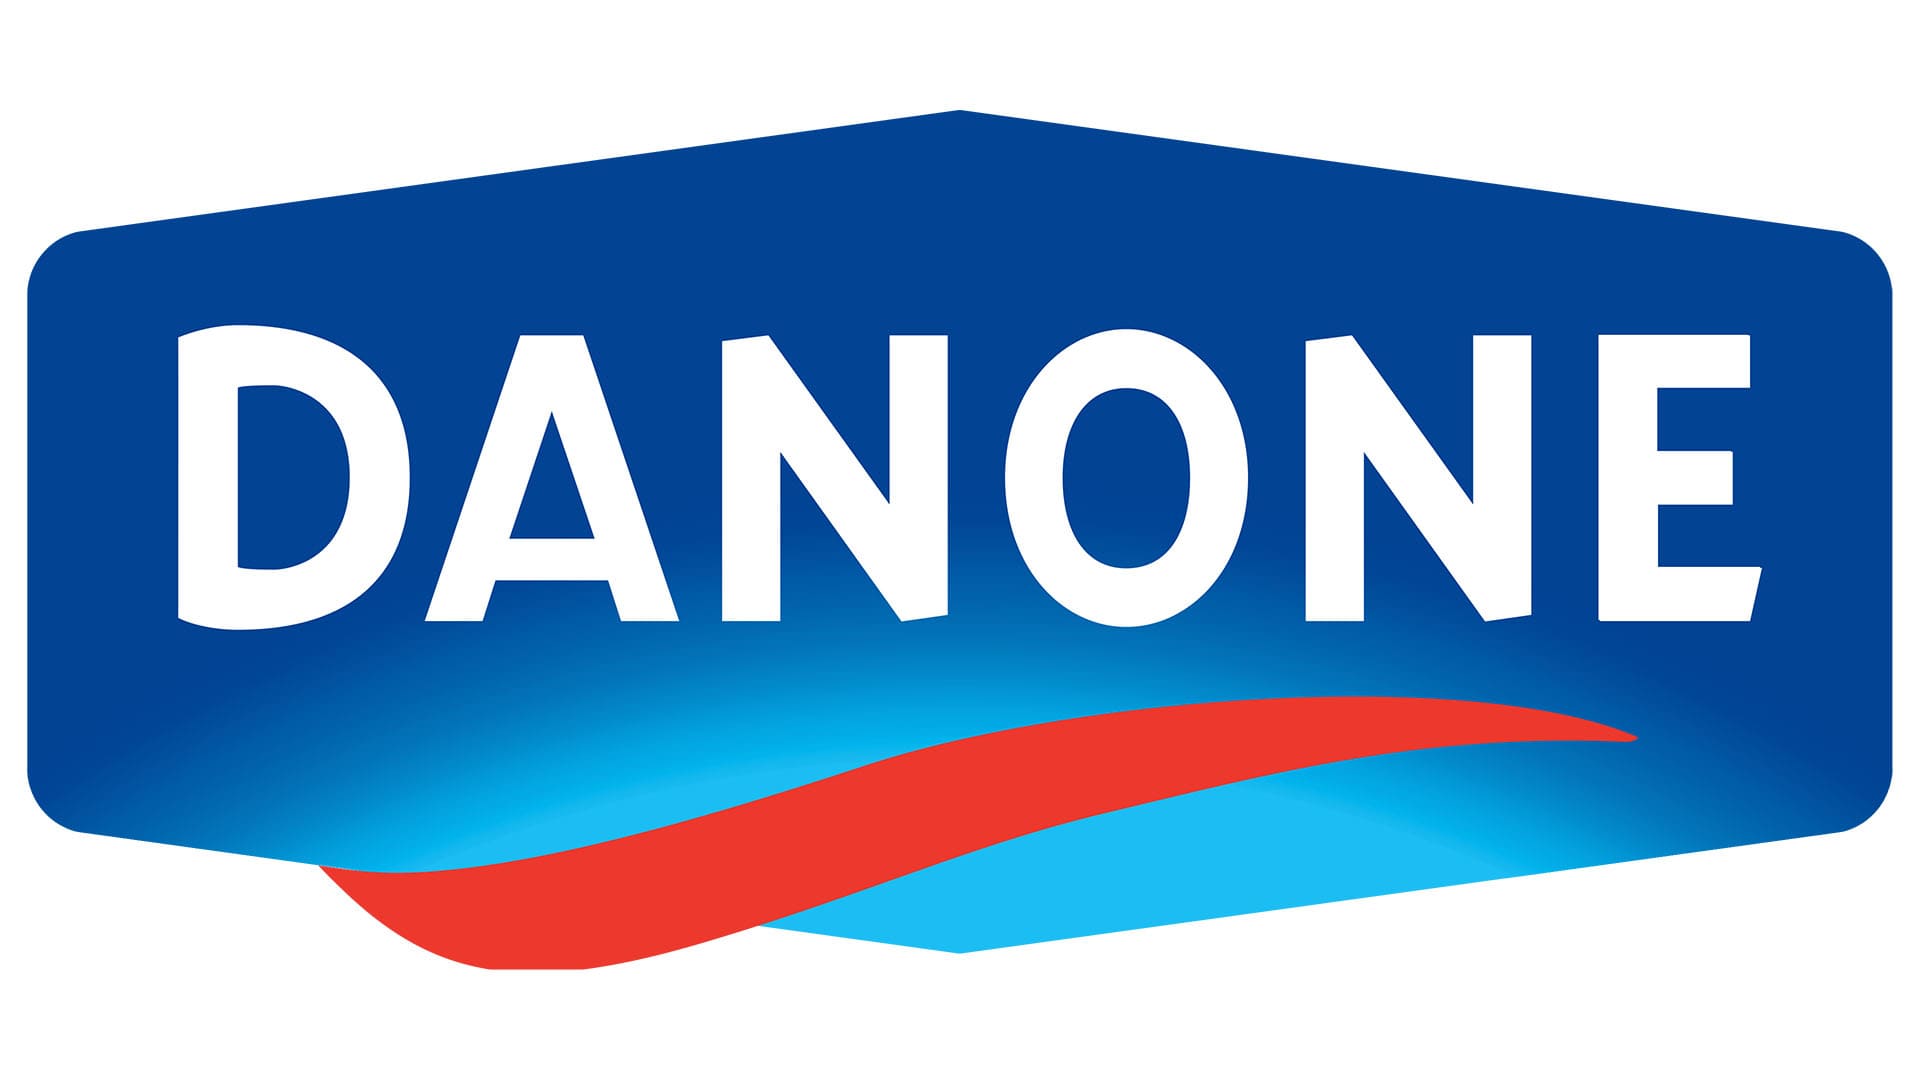 Danone-Logo-1993-2005